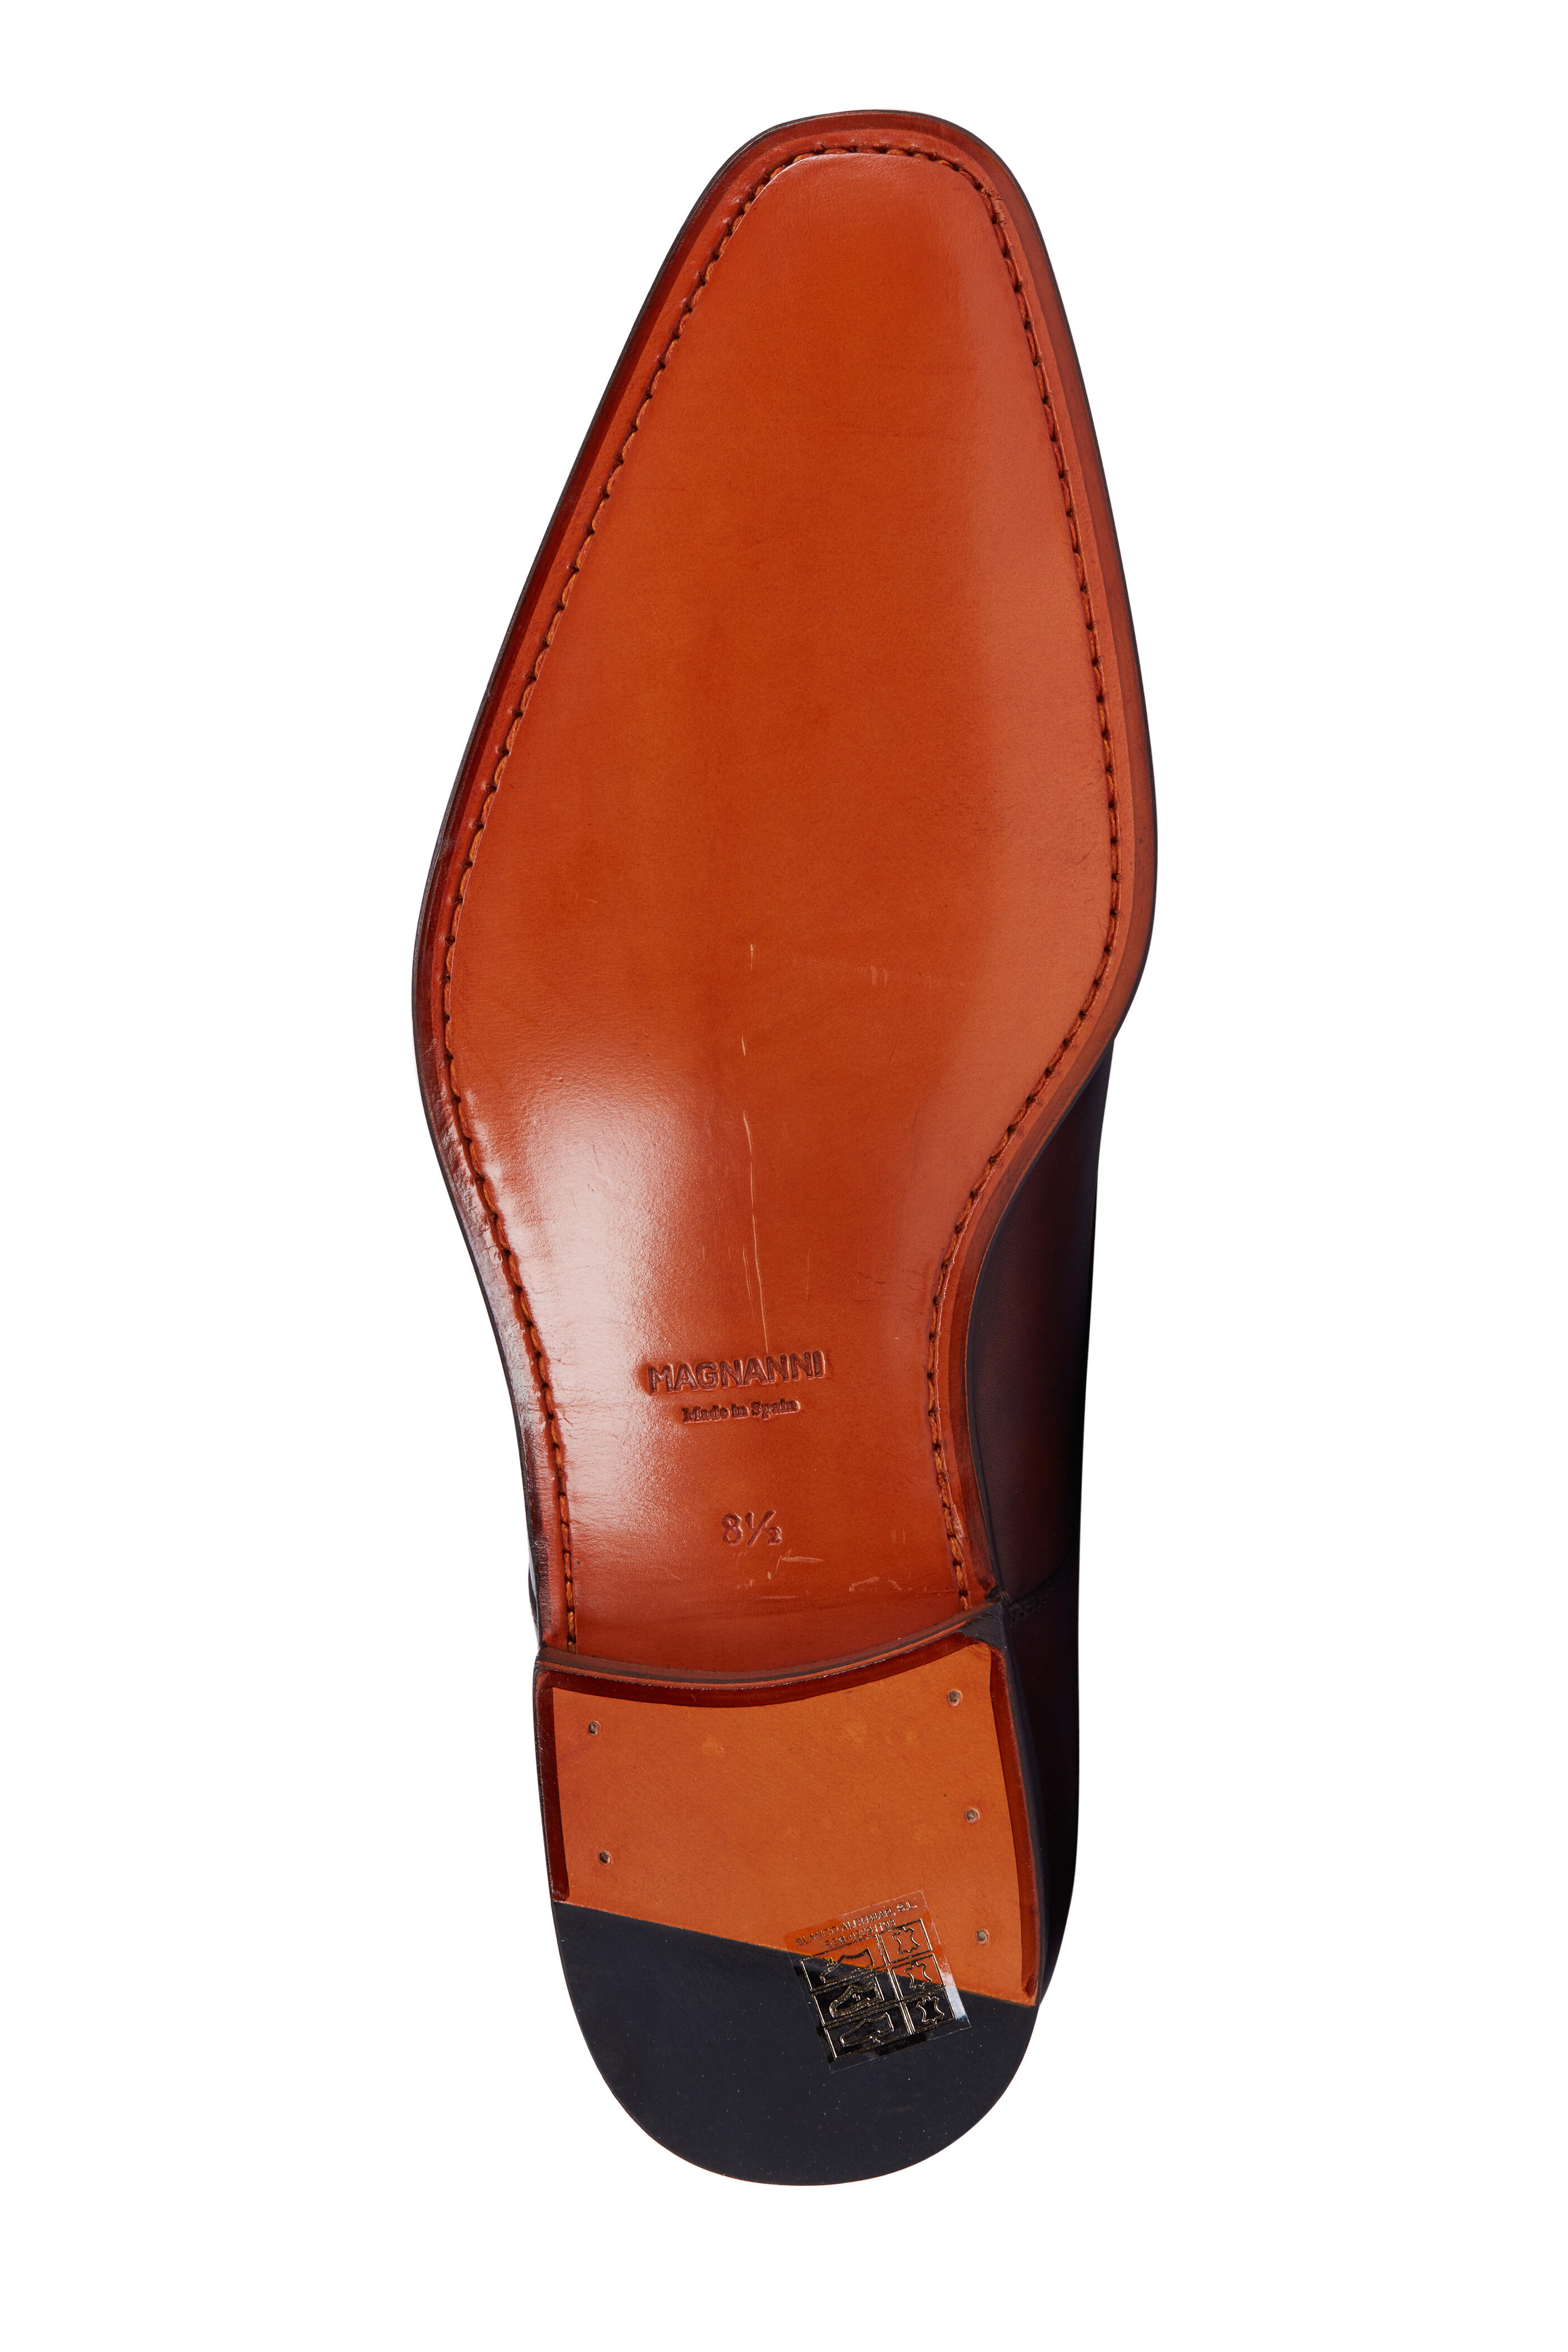 Magnanni Cotillas Medium Brown Monk Dress Shoe